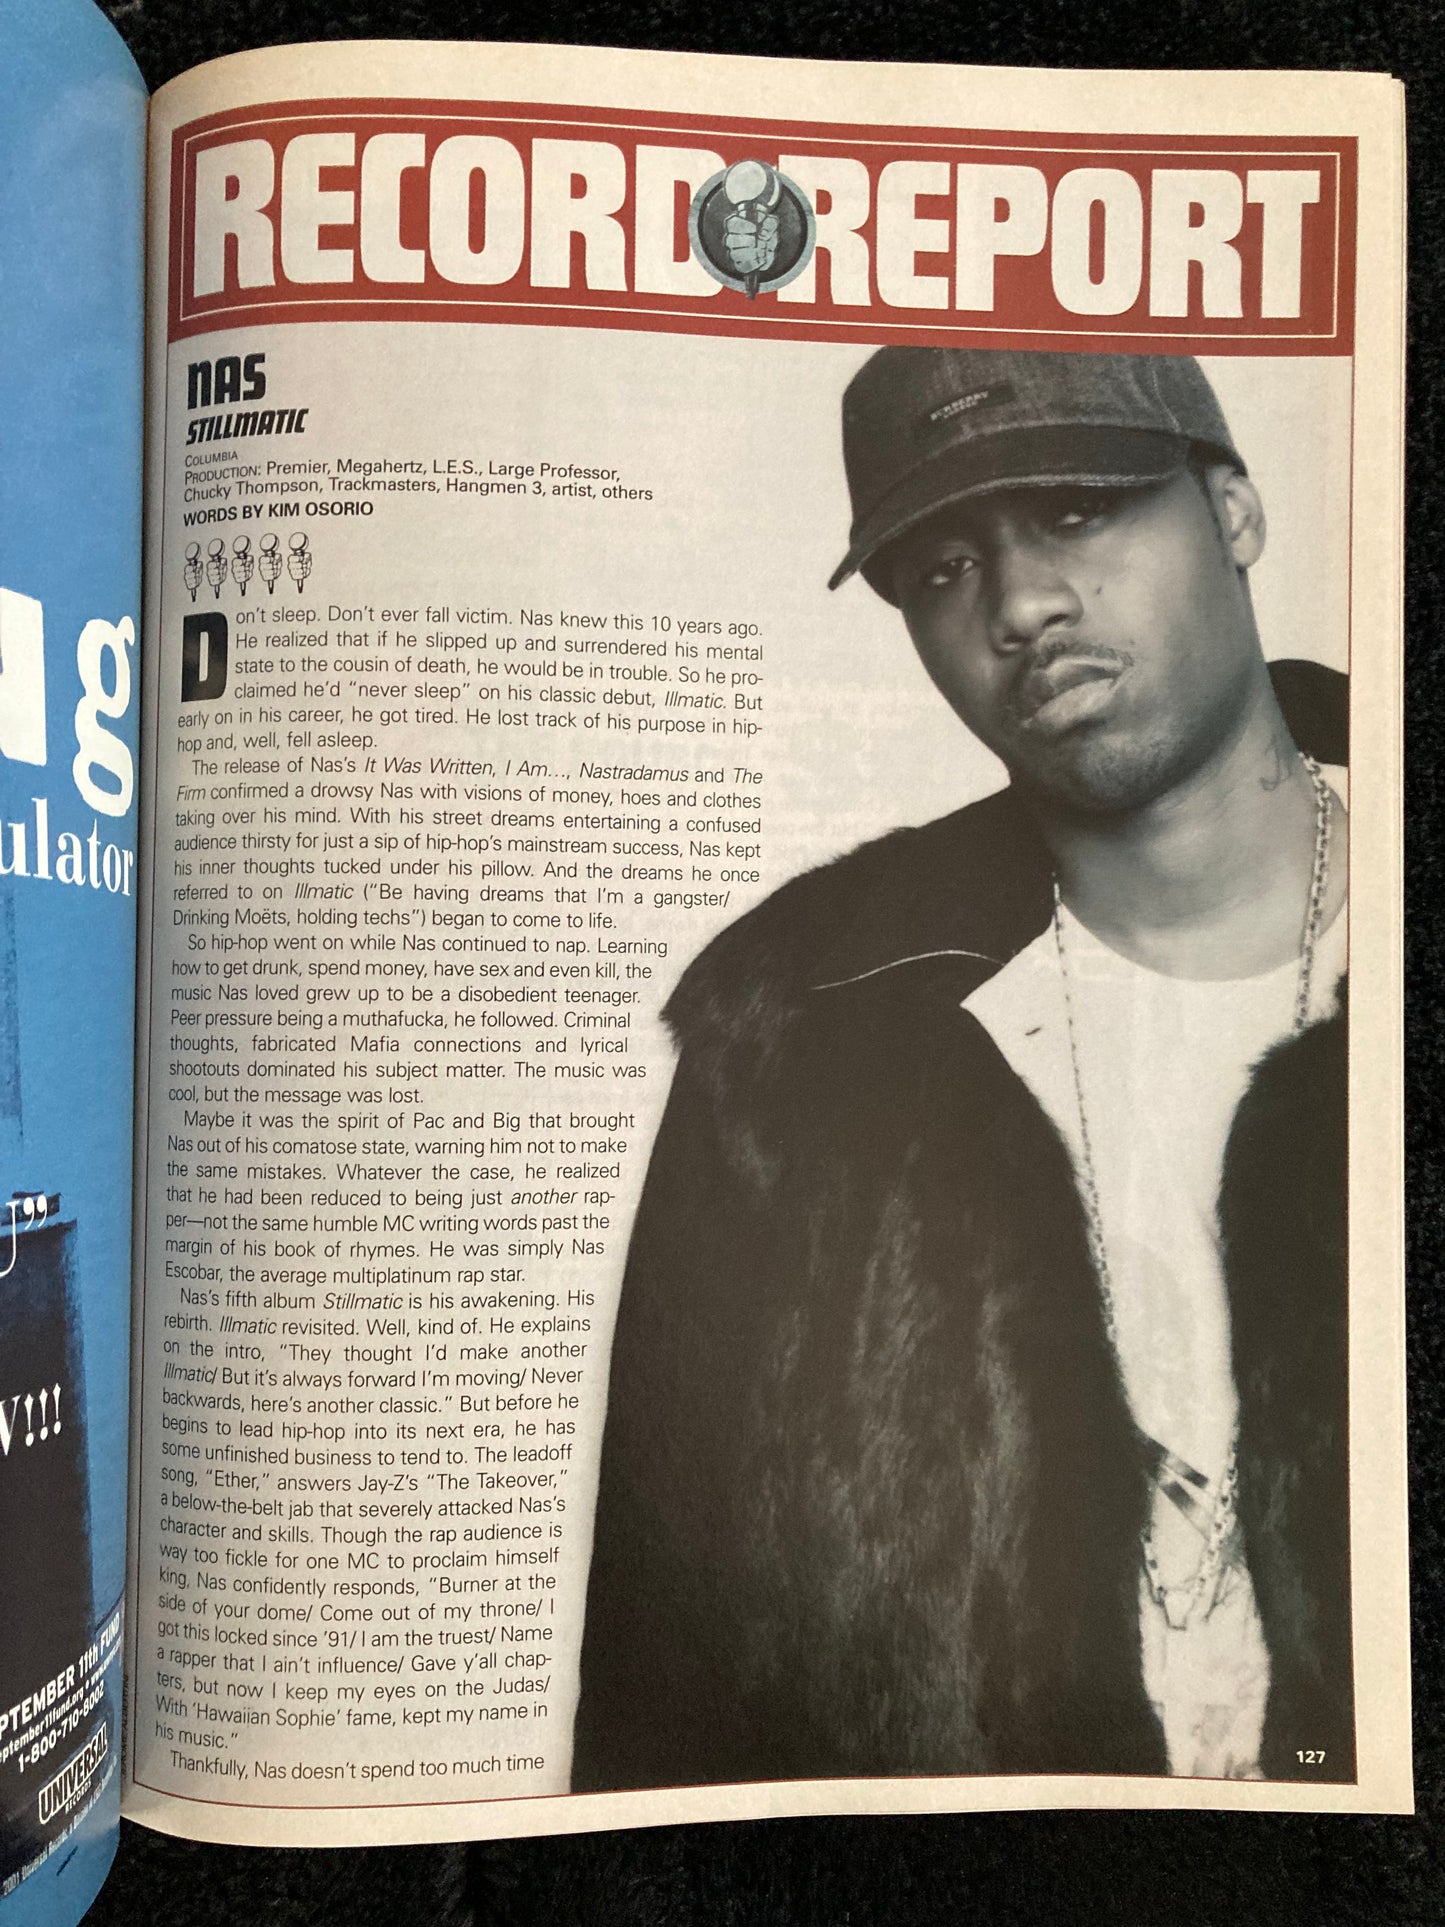 The Source Magazine February 2002 Jermaine Dupri